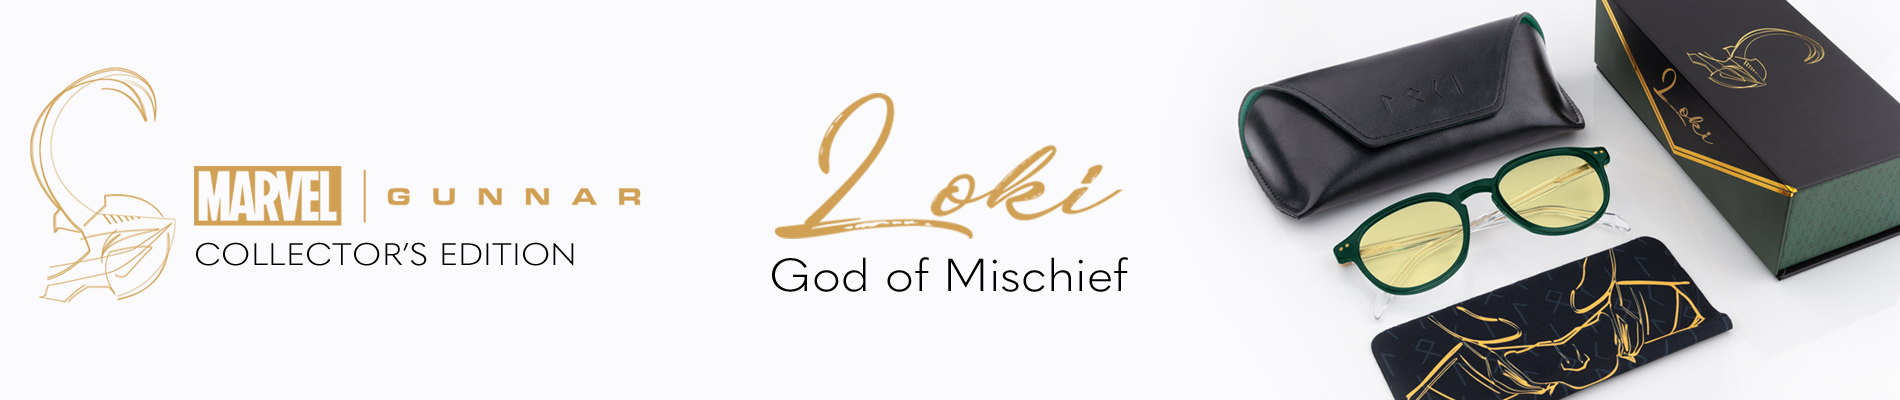 Loki God of Mischief Collector's Edition